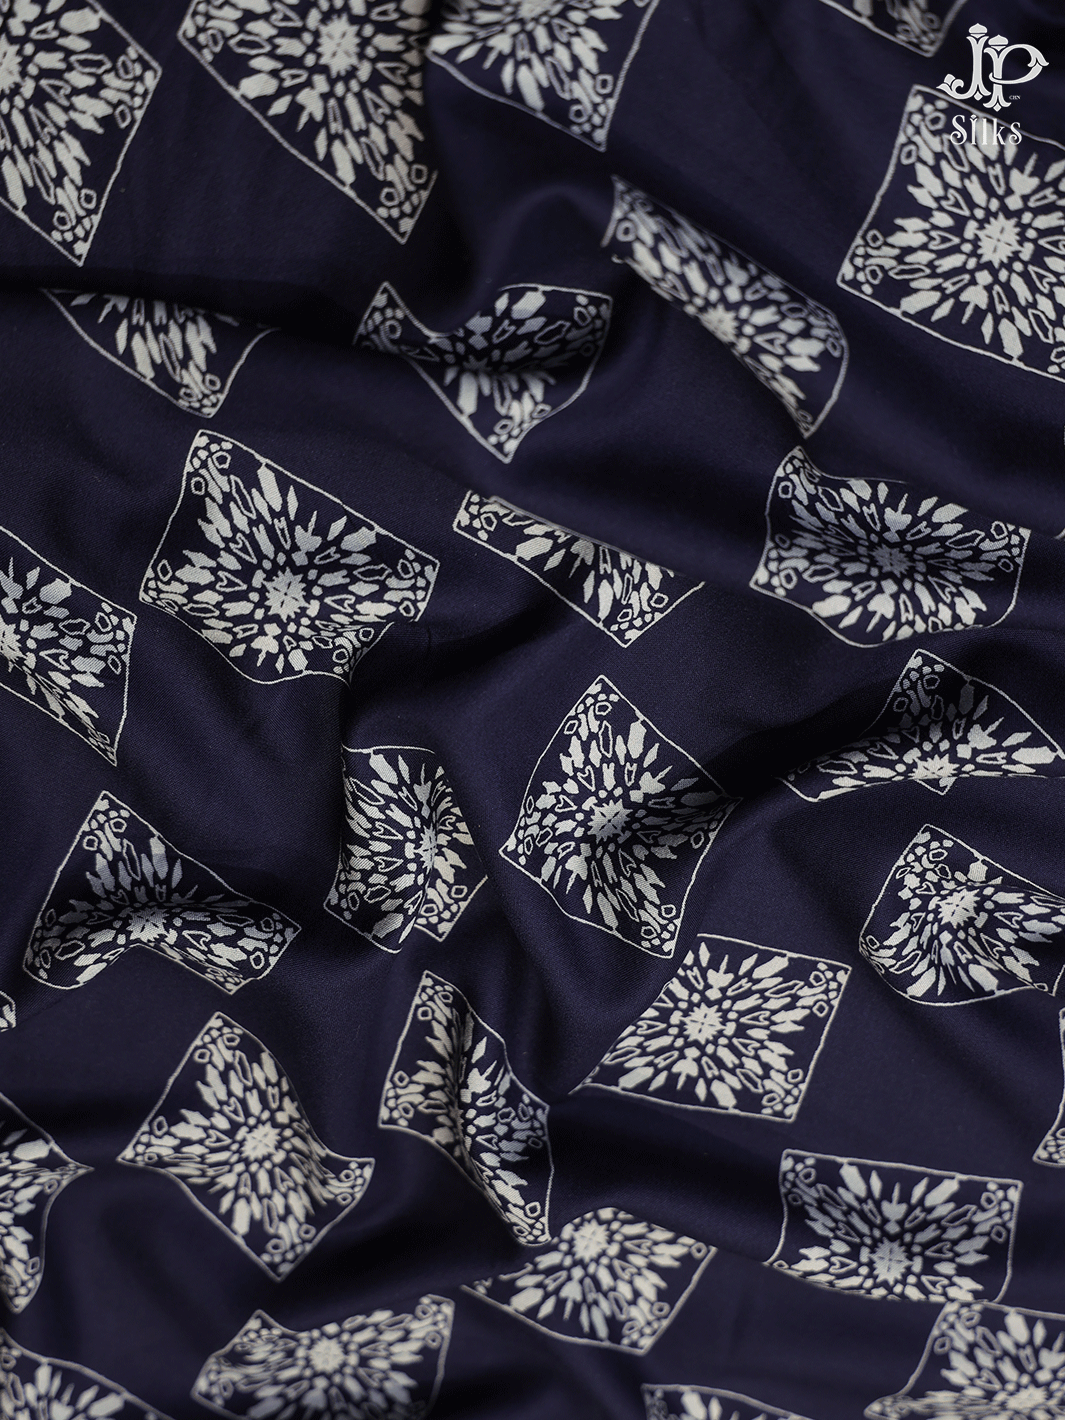 Black Rayon Fabric - A9267